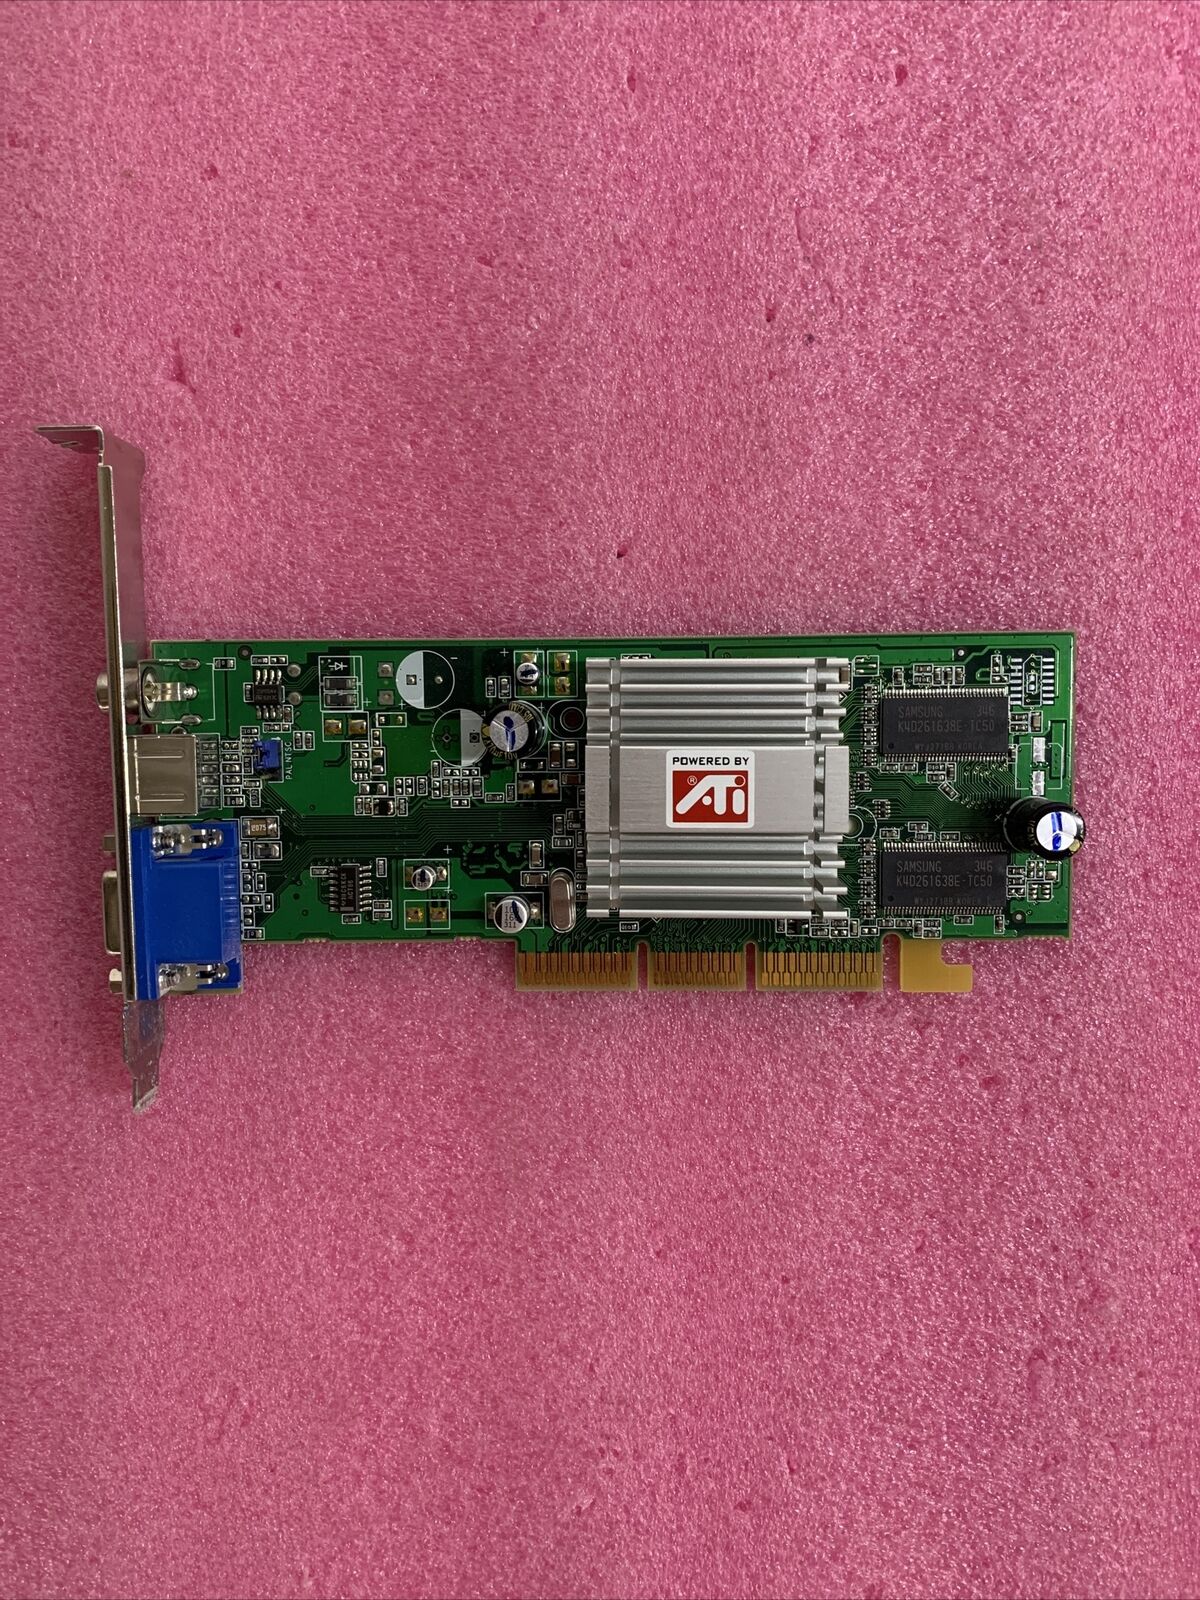 ATI Radeon 9200SE 64M DDR TVO Graphics Card